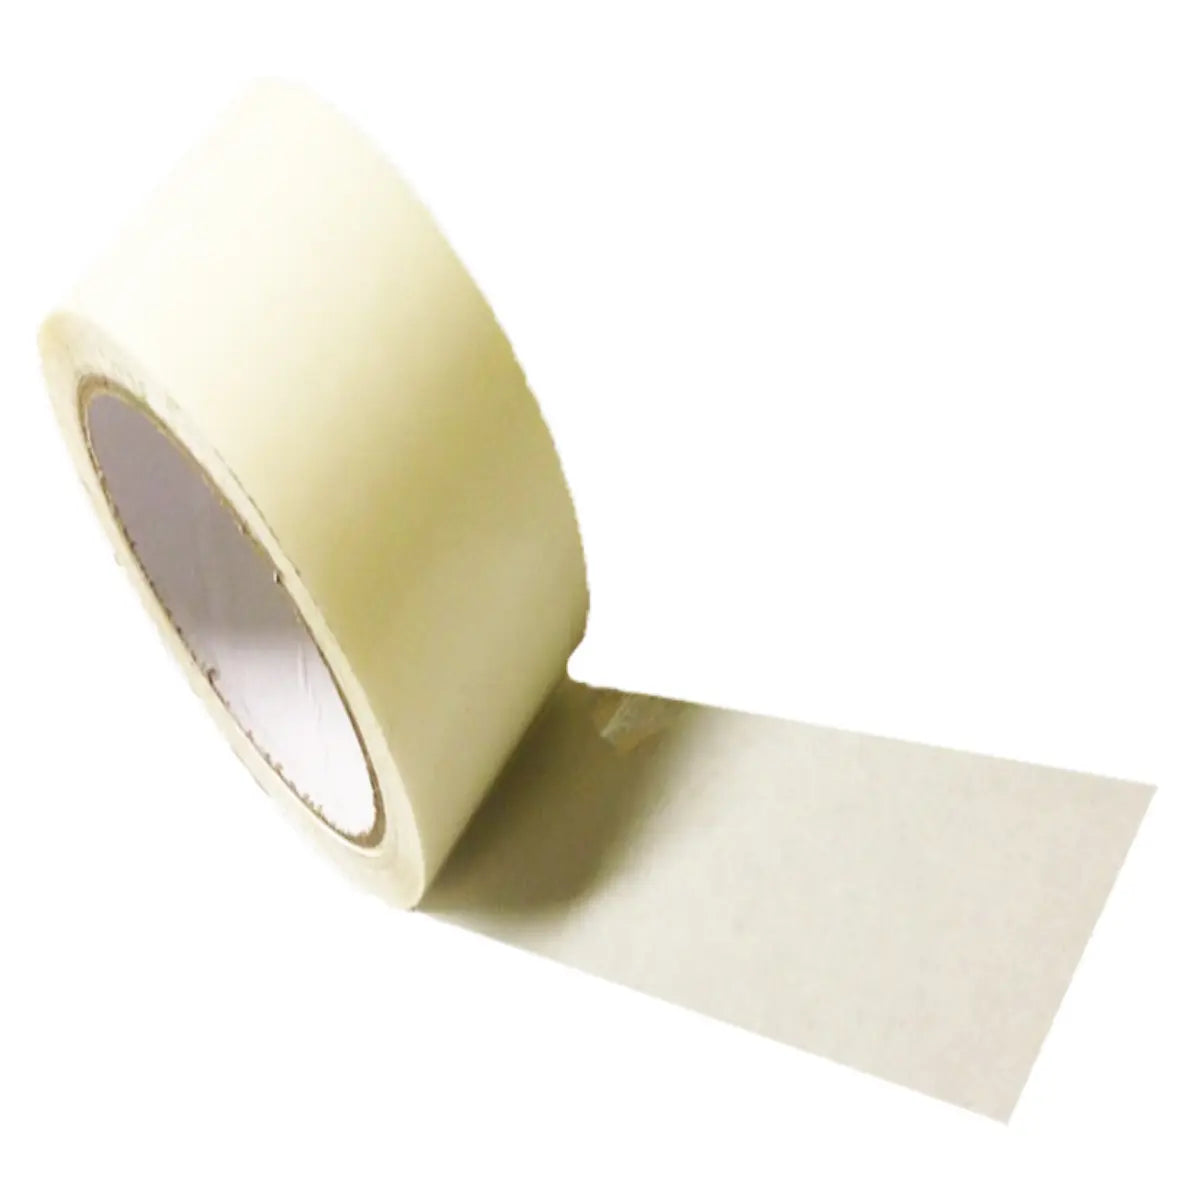 coloured adhesive tape - white